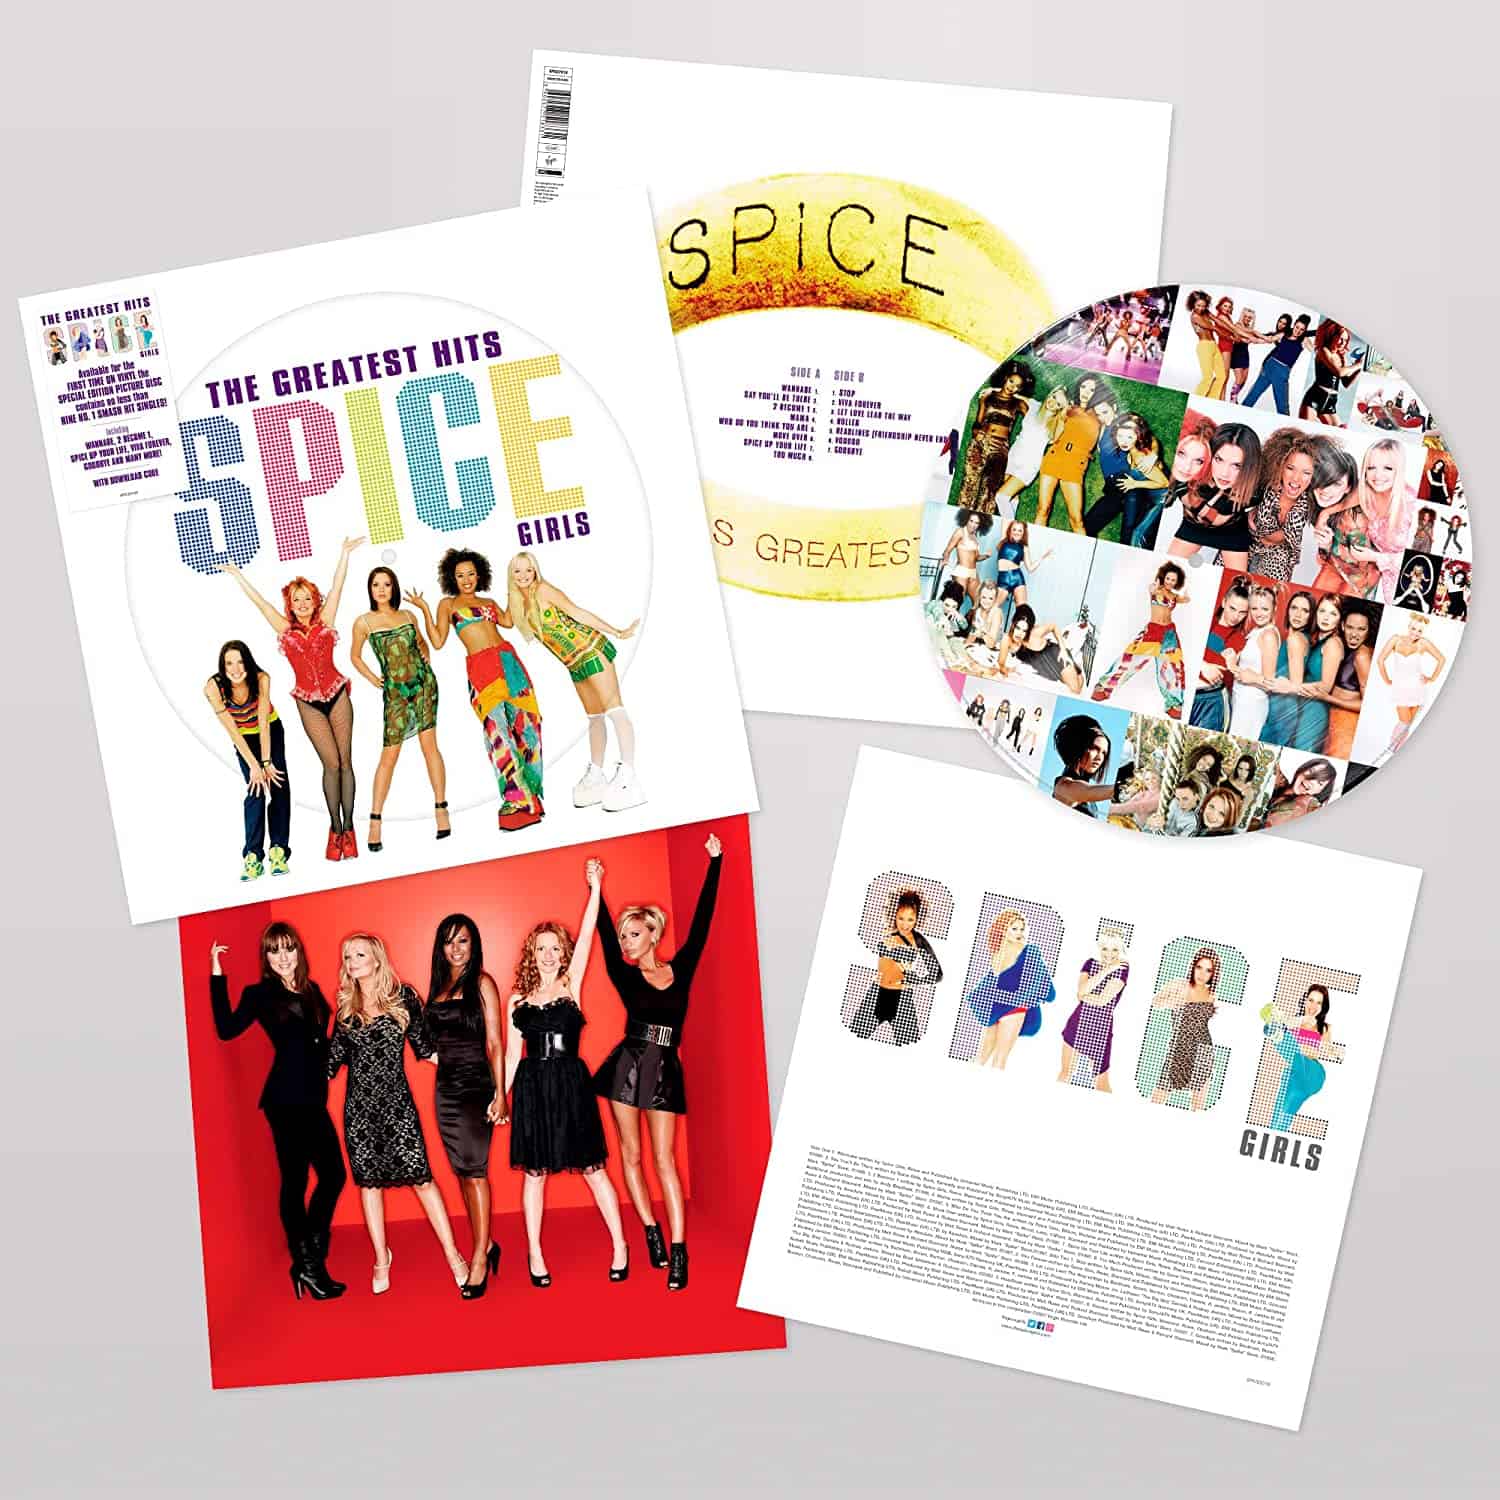 Spice-Girls-Greatest-Hits-Picture-Disc-vinyl-LP-record-album-spread